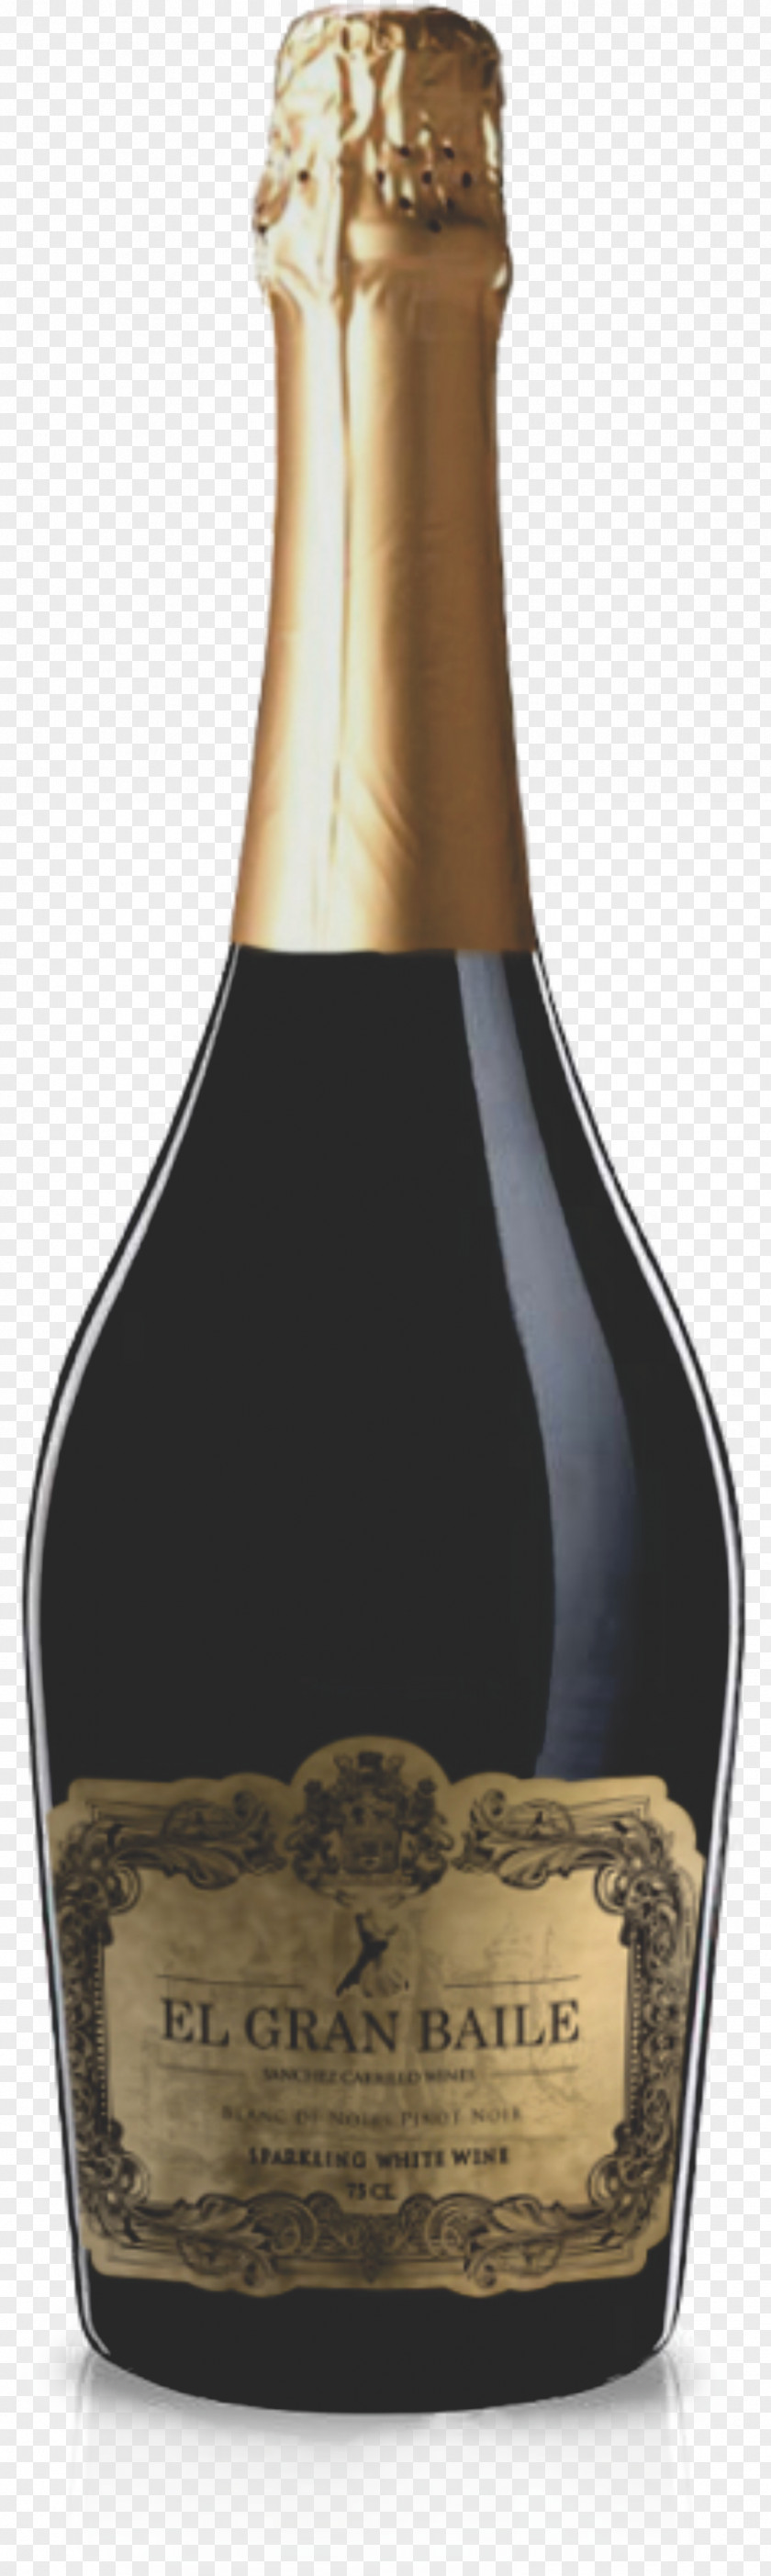 Champagne Sparkling Wine Common Grape Vine Roca 360 Tienda De Vinos Online PNG